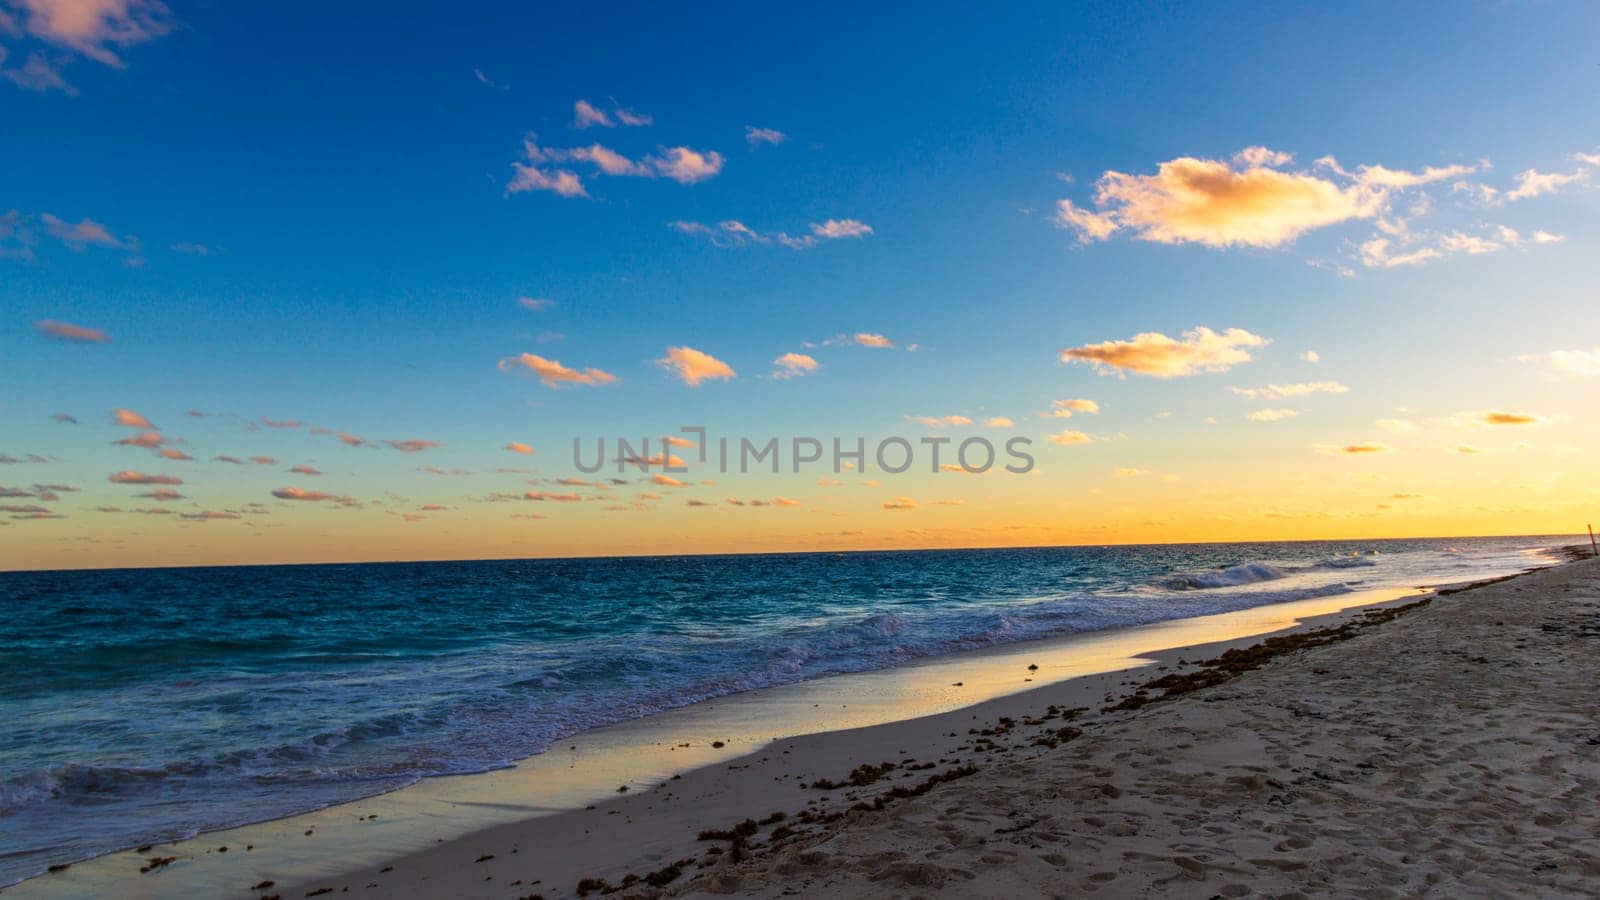 Horseshoe Bay Beach and Deep Bay Beach in Hamilton, Bermuda